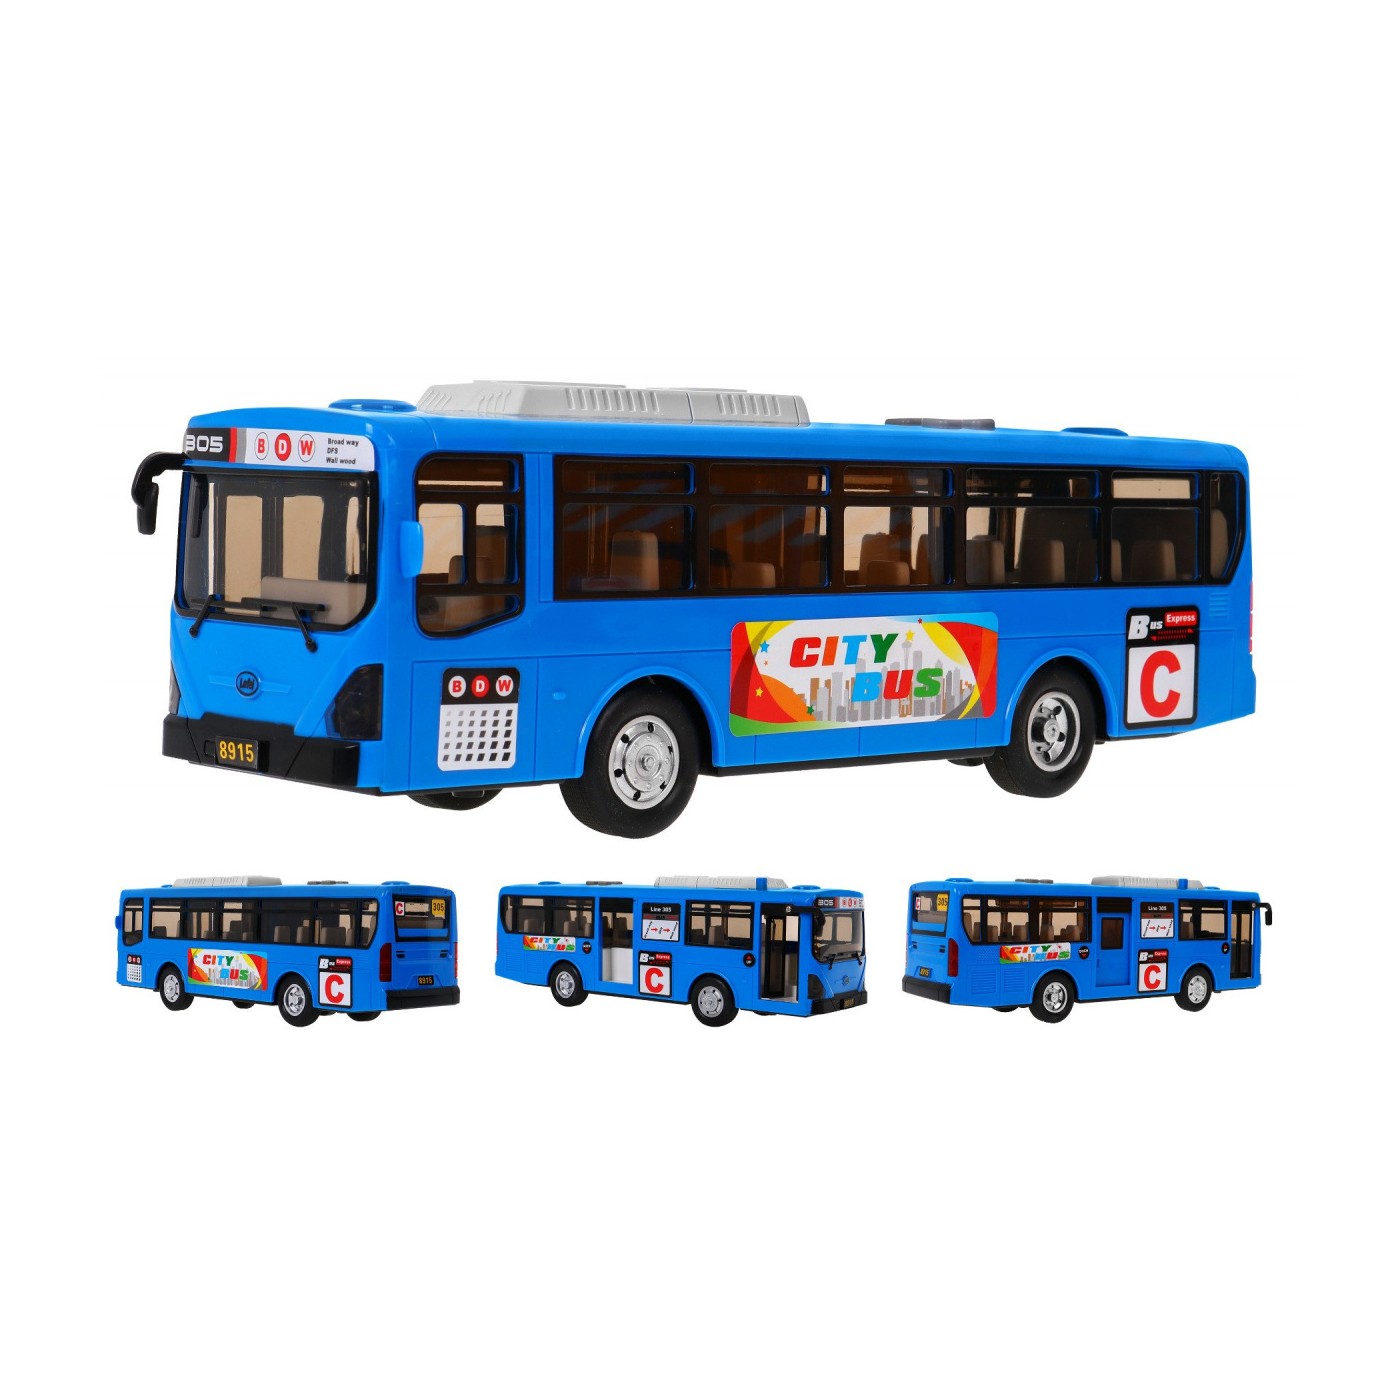 School Bus Blue